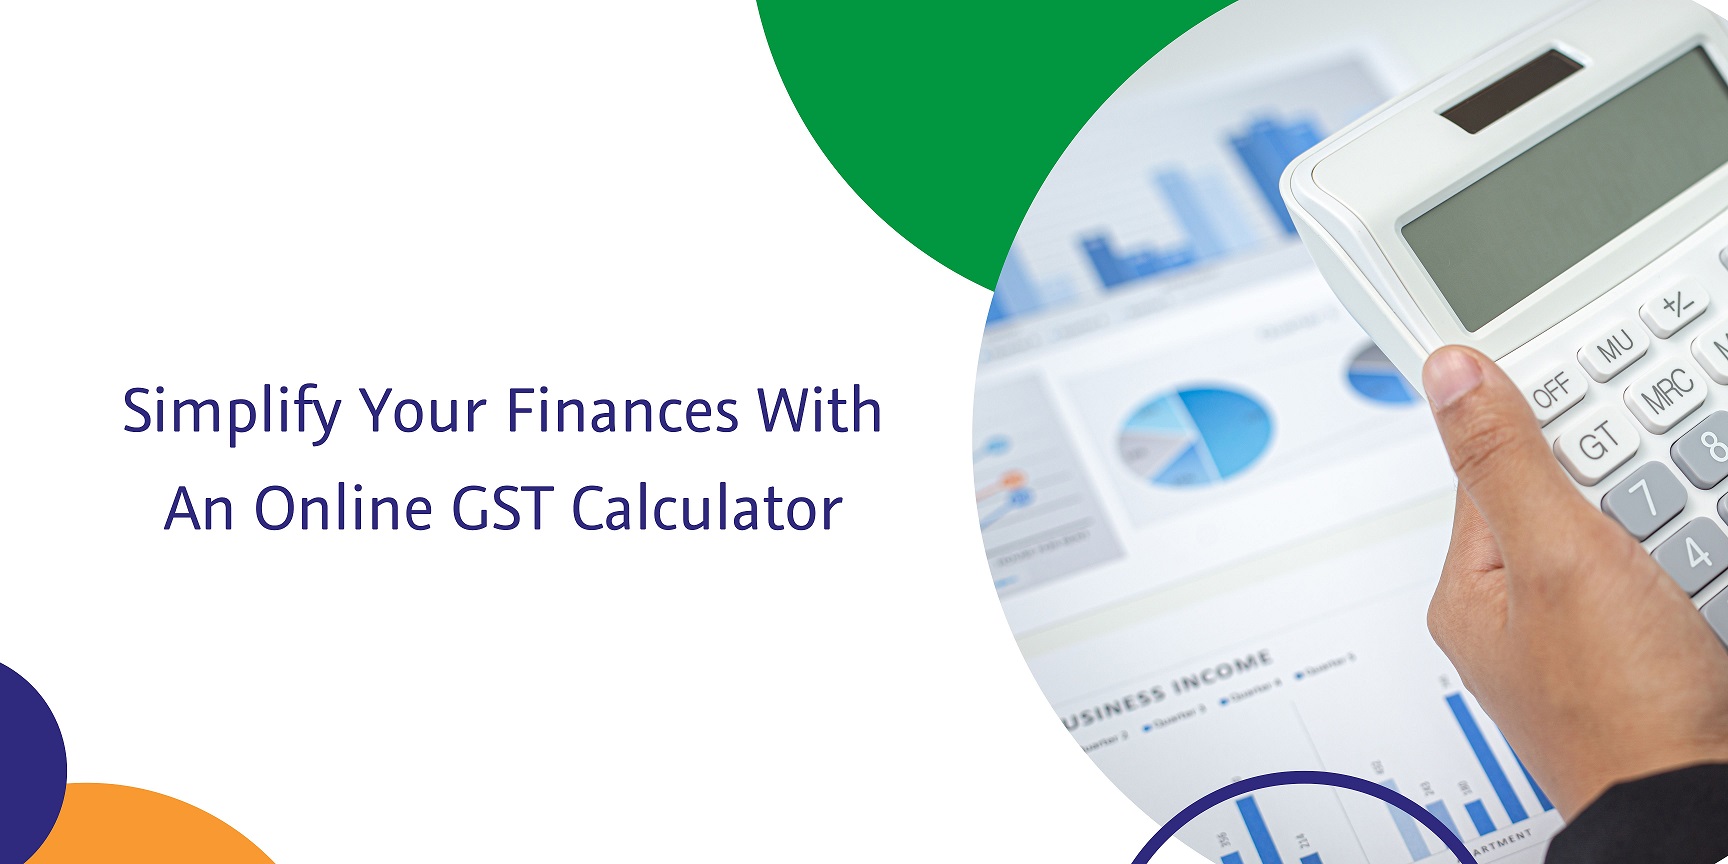 CaptainBiz: Simplify Your Finances With An Online GST Calculator